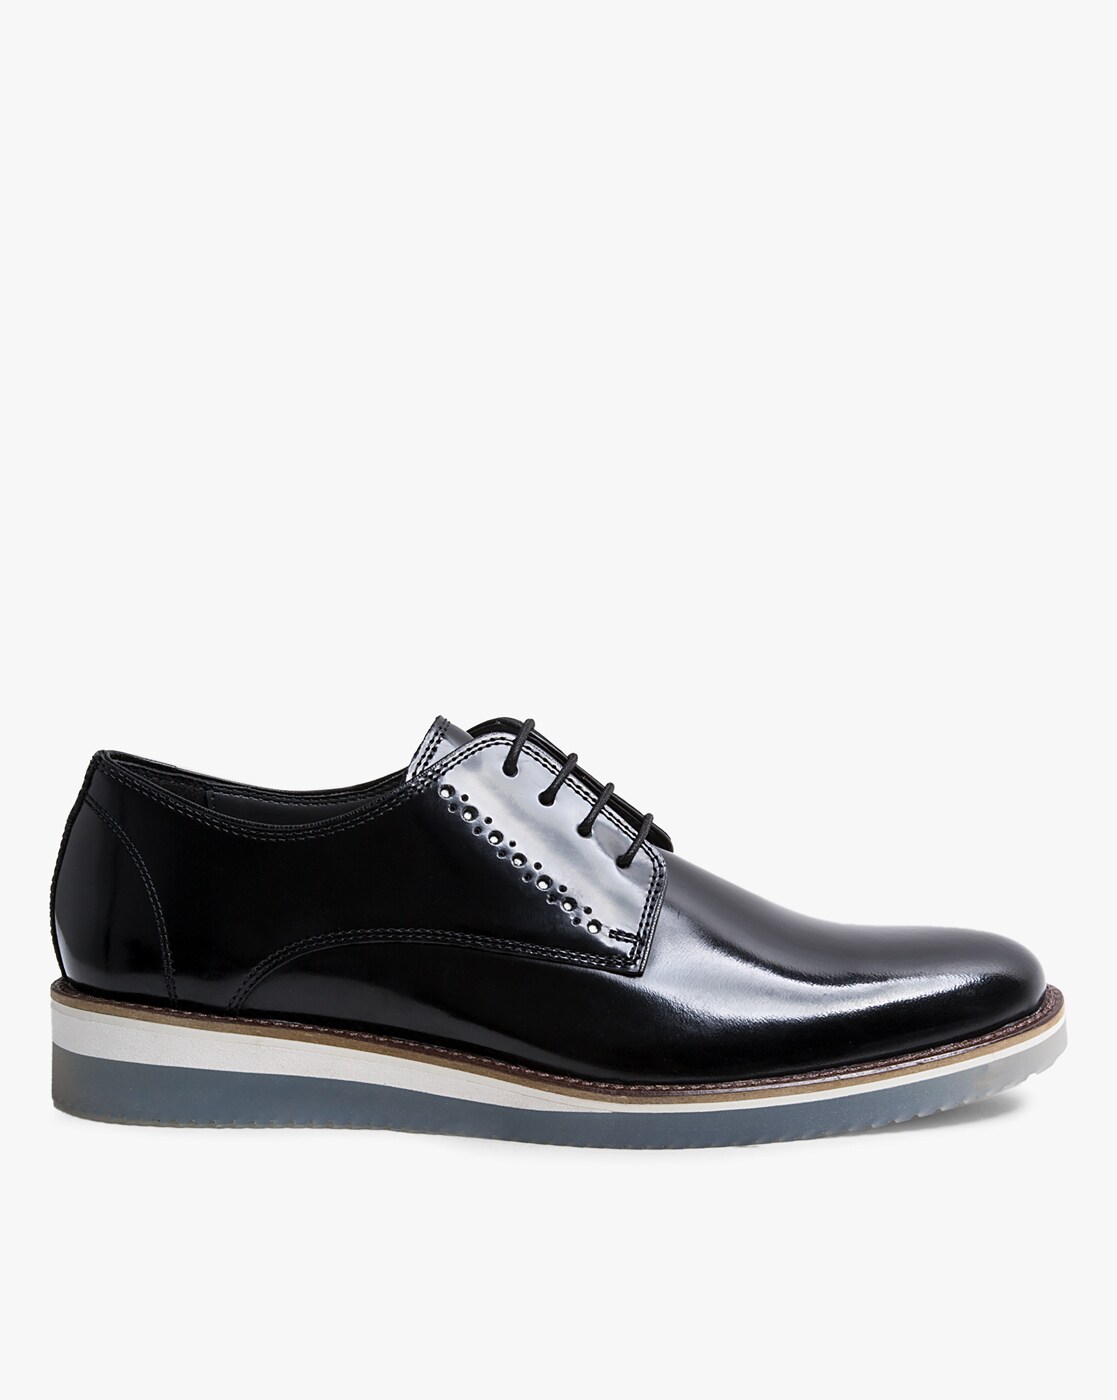 black formal heel